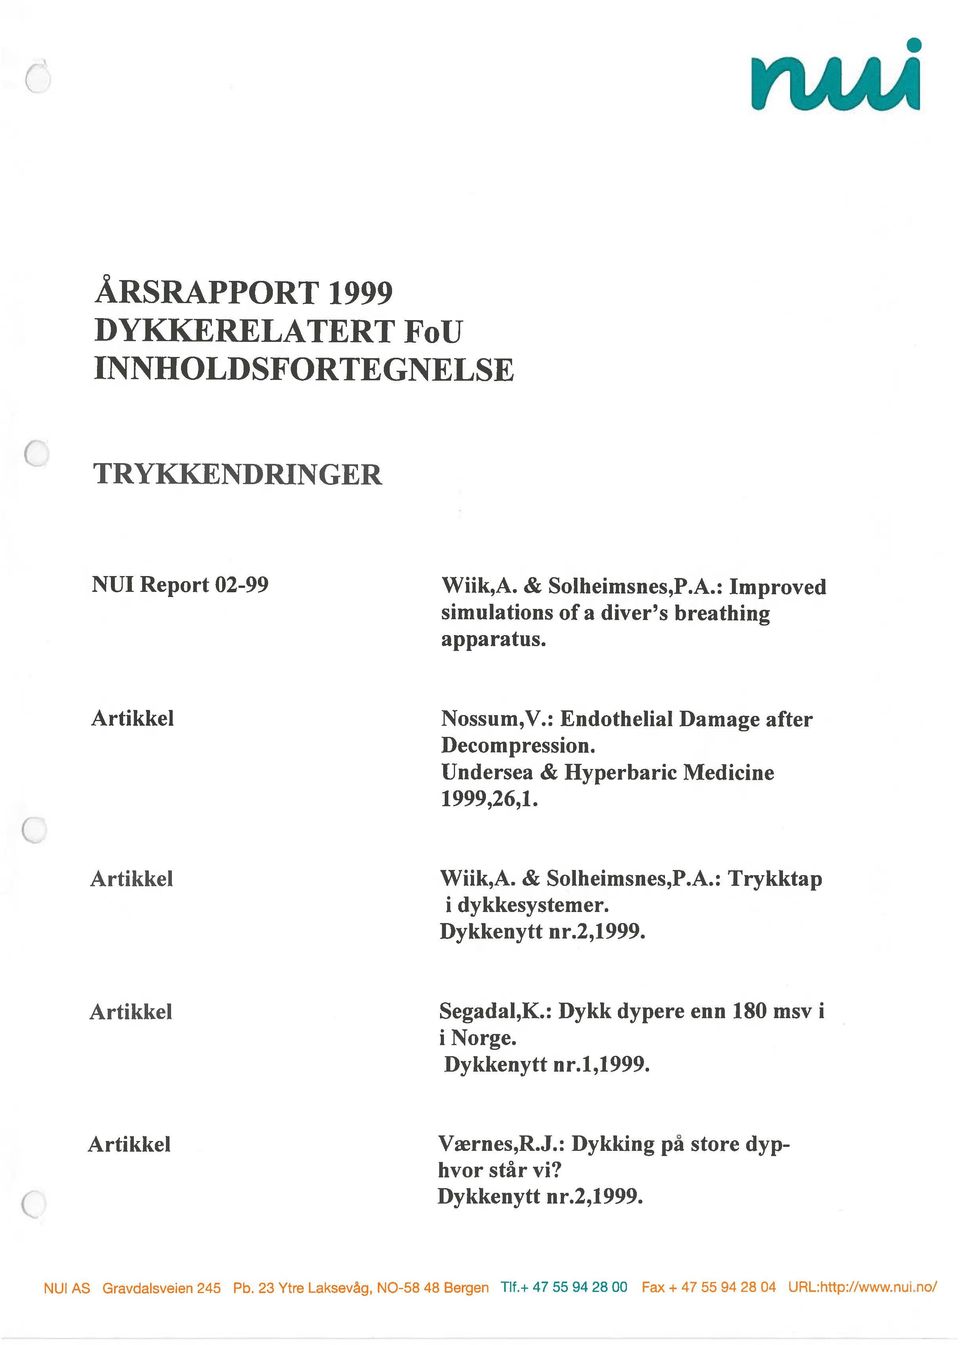 Undersea & Hyperbaric Medicine Decompression. Artikkel Nossum,V.: Endothelial Damage after apparatus.